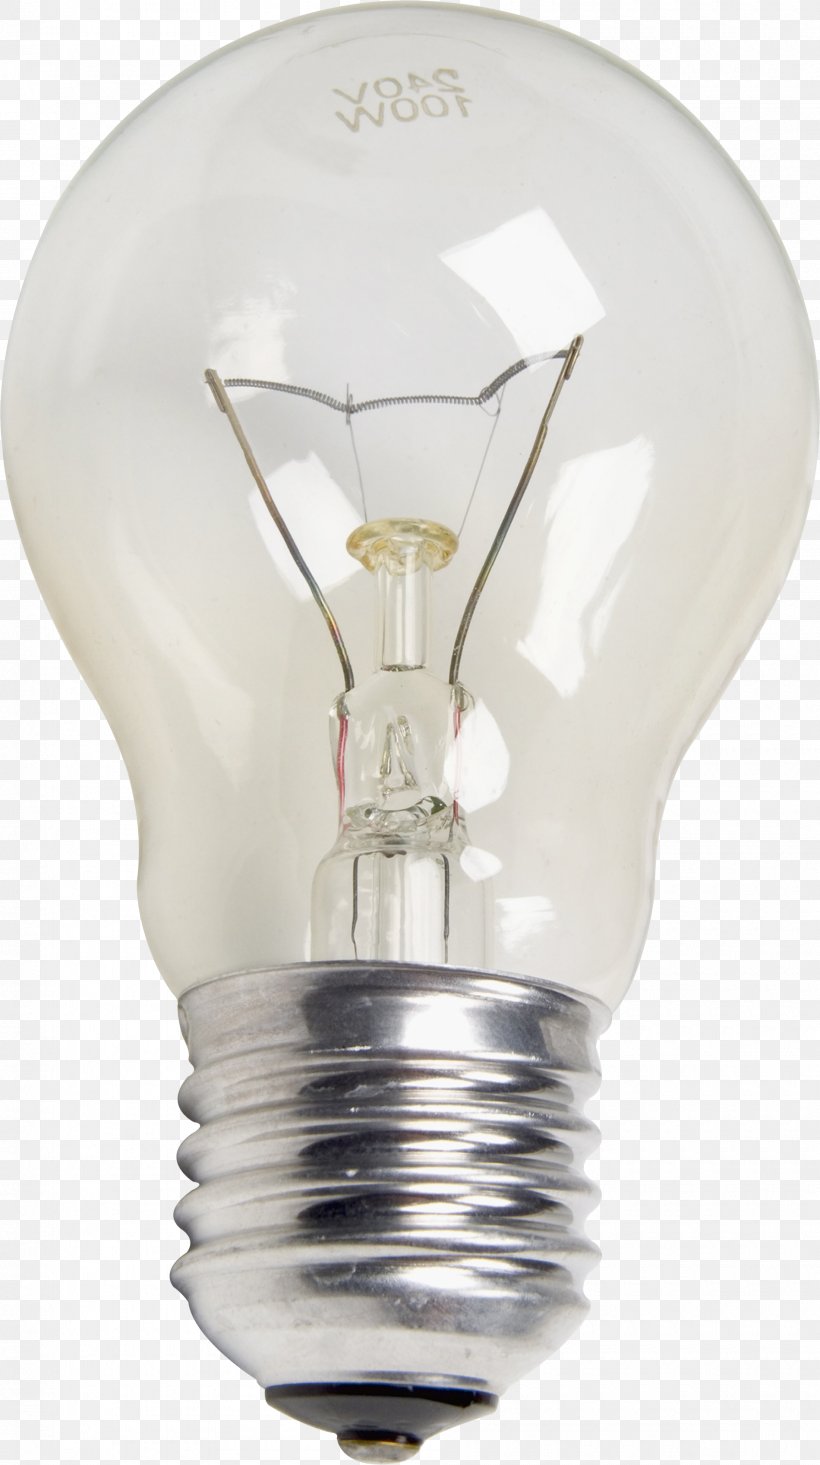 Incandescent Light Bulb Lamp Lighting Clip Art, PNG, 1900x3395px, Light, Compact Fluorescent Lamp, Electric Light, Incandescent Light Bulb, Lamp Download Free